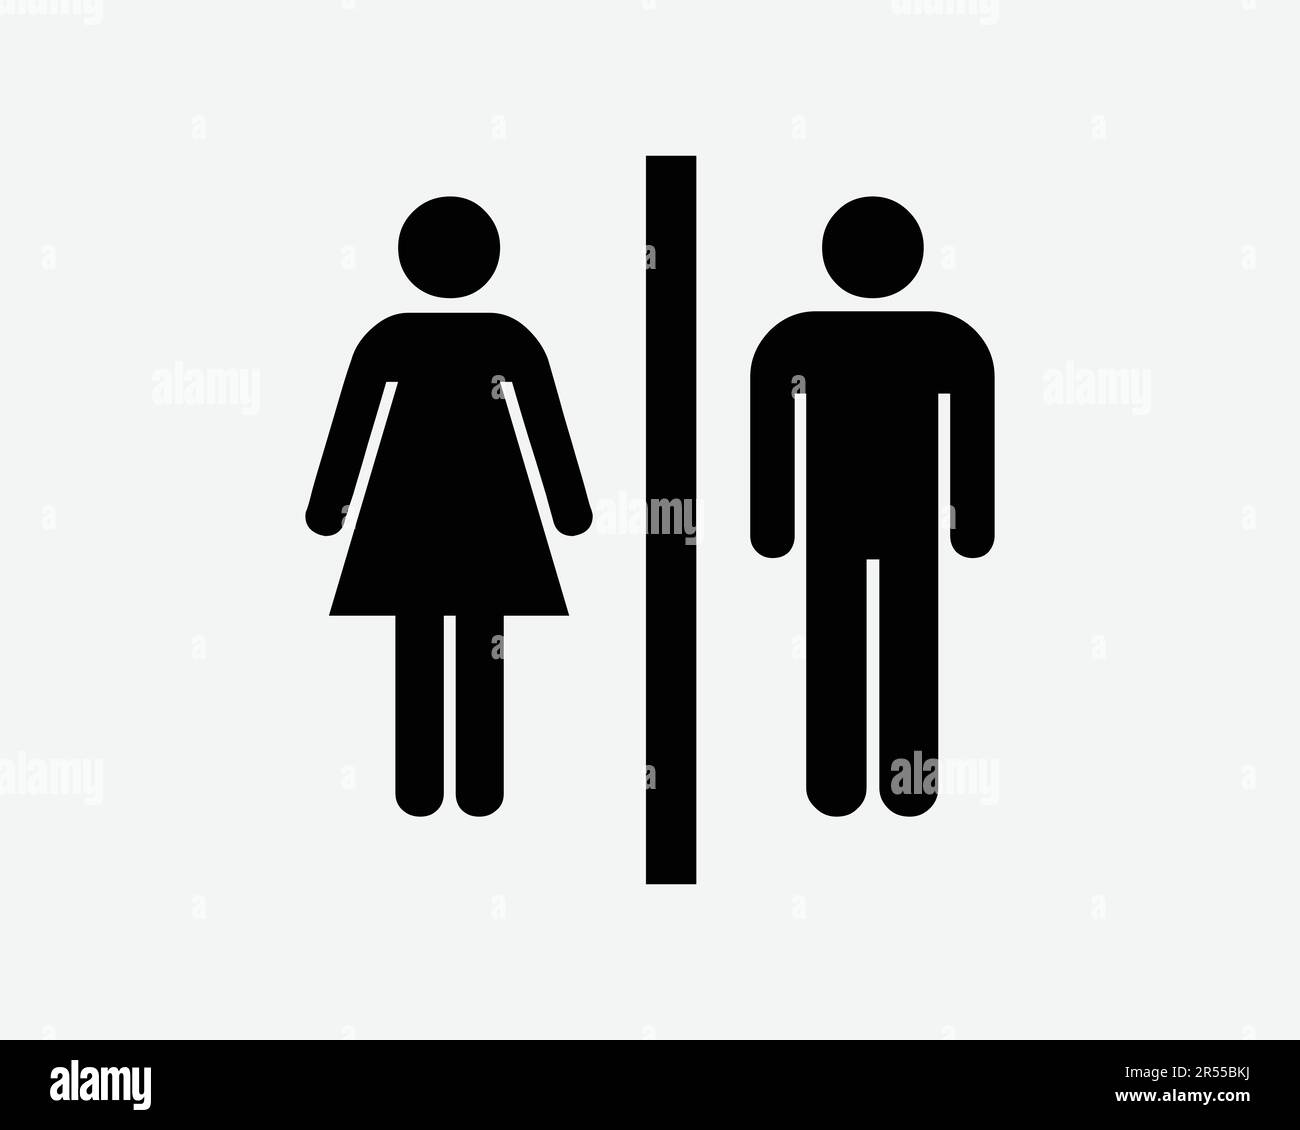 Bathroom Gender Icon. Men Women Man Woman Male Female Girl Boy Washroom Toilet Label Sign Symbol Black Artwork Graphic Illustration Clipart EPS Vector Stock Vector